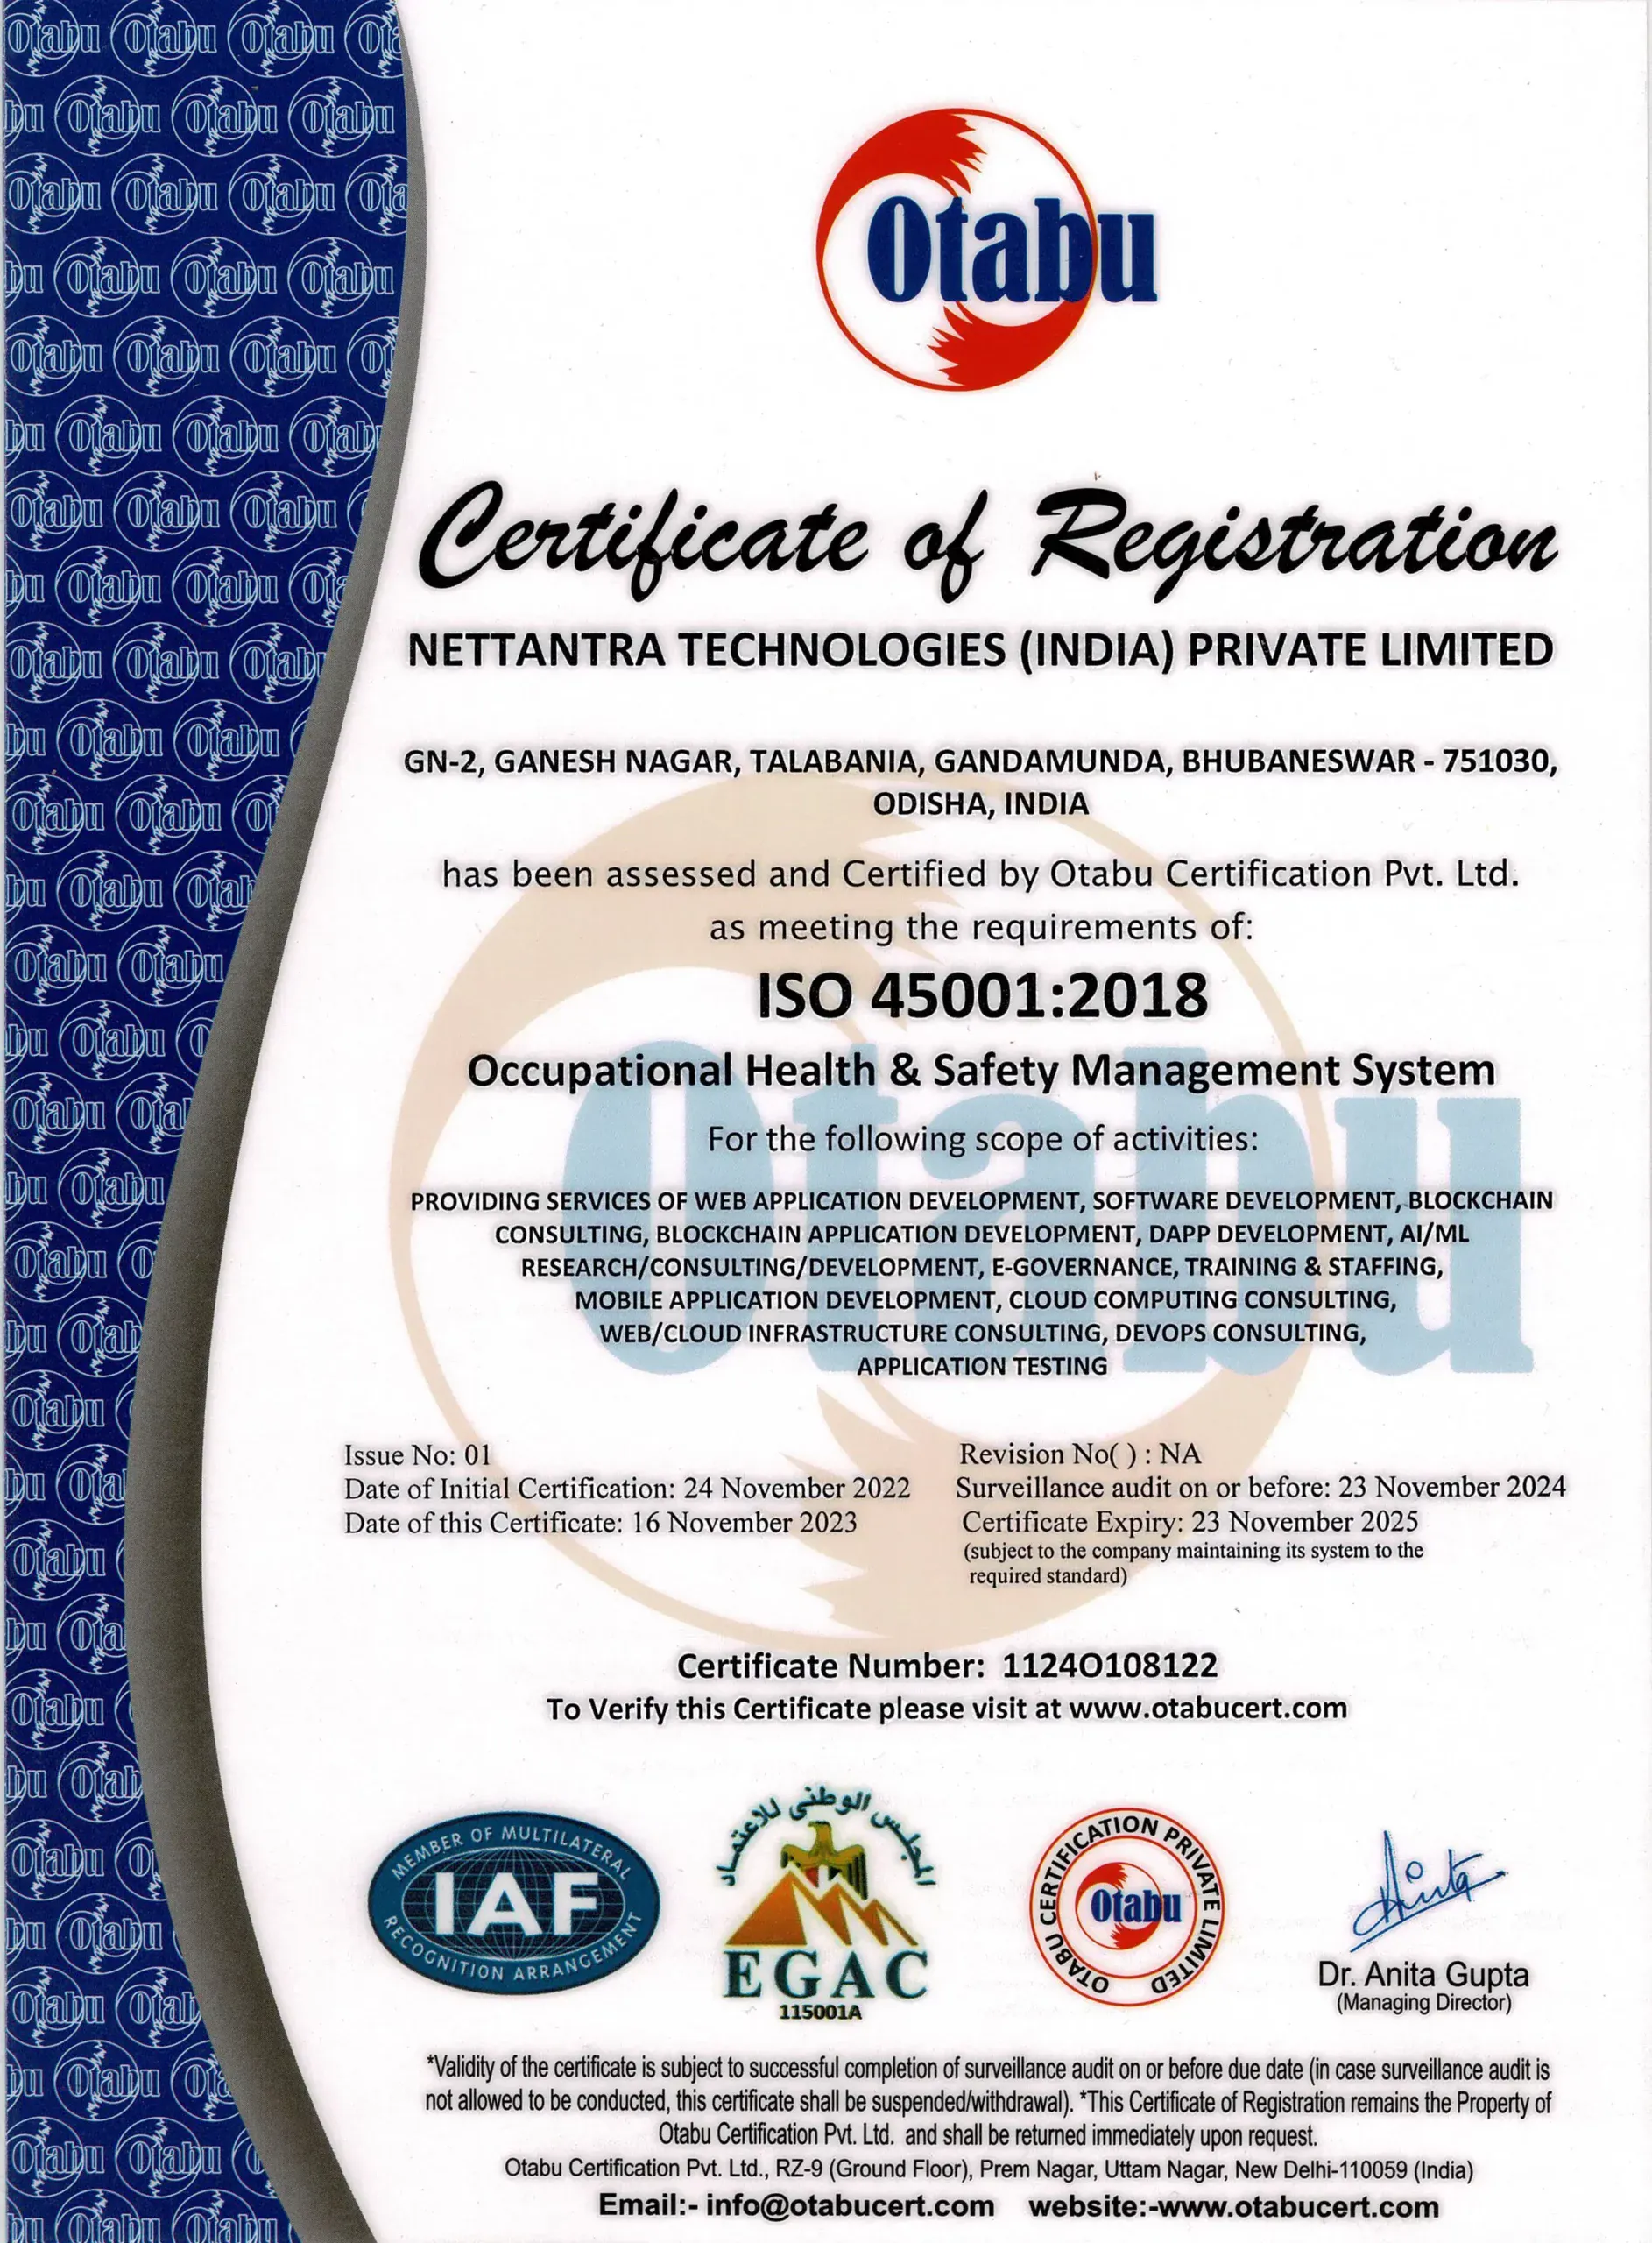 NetTantra - ISO 45001-2018 Certification